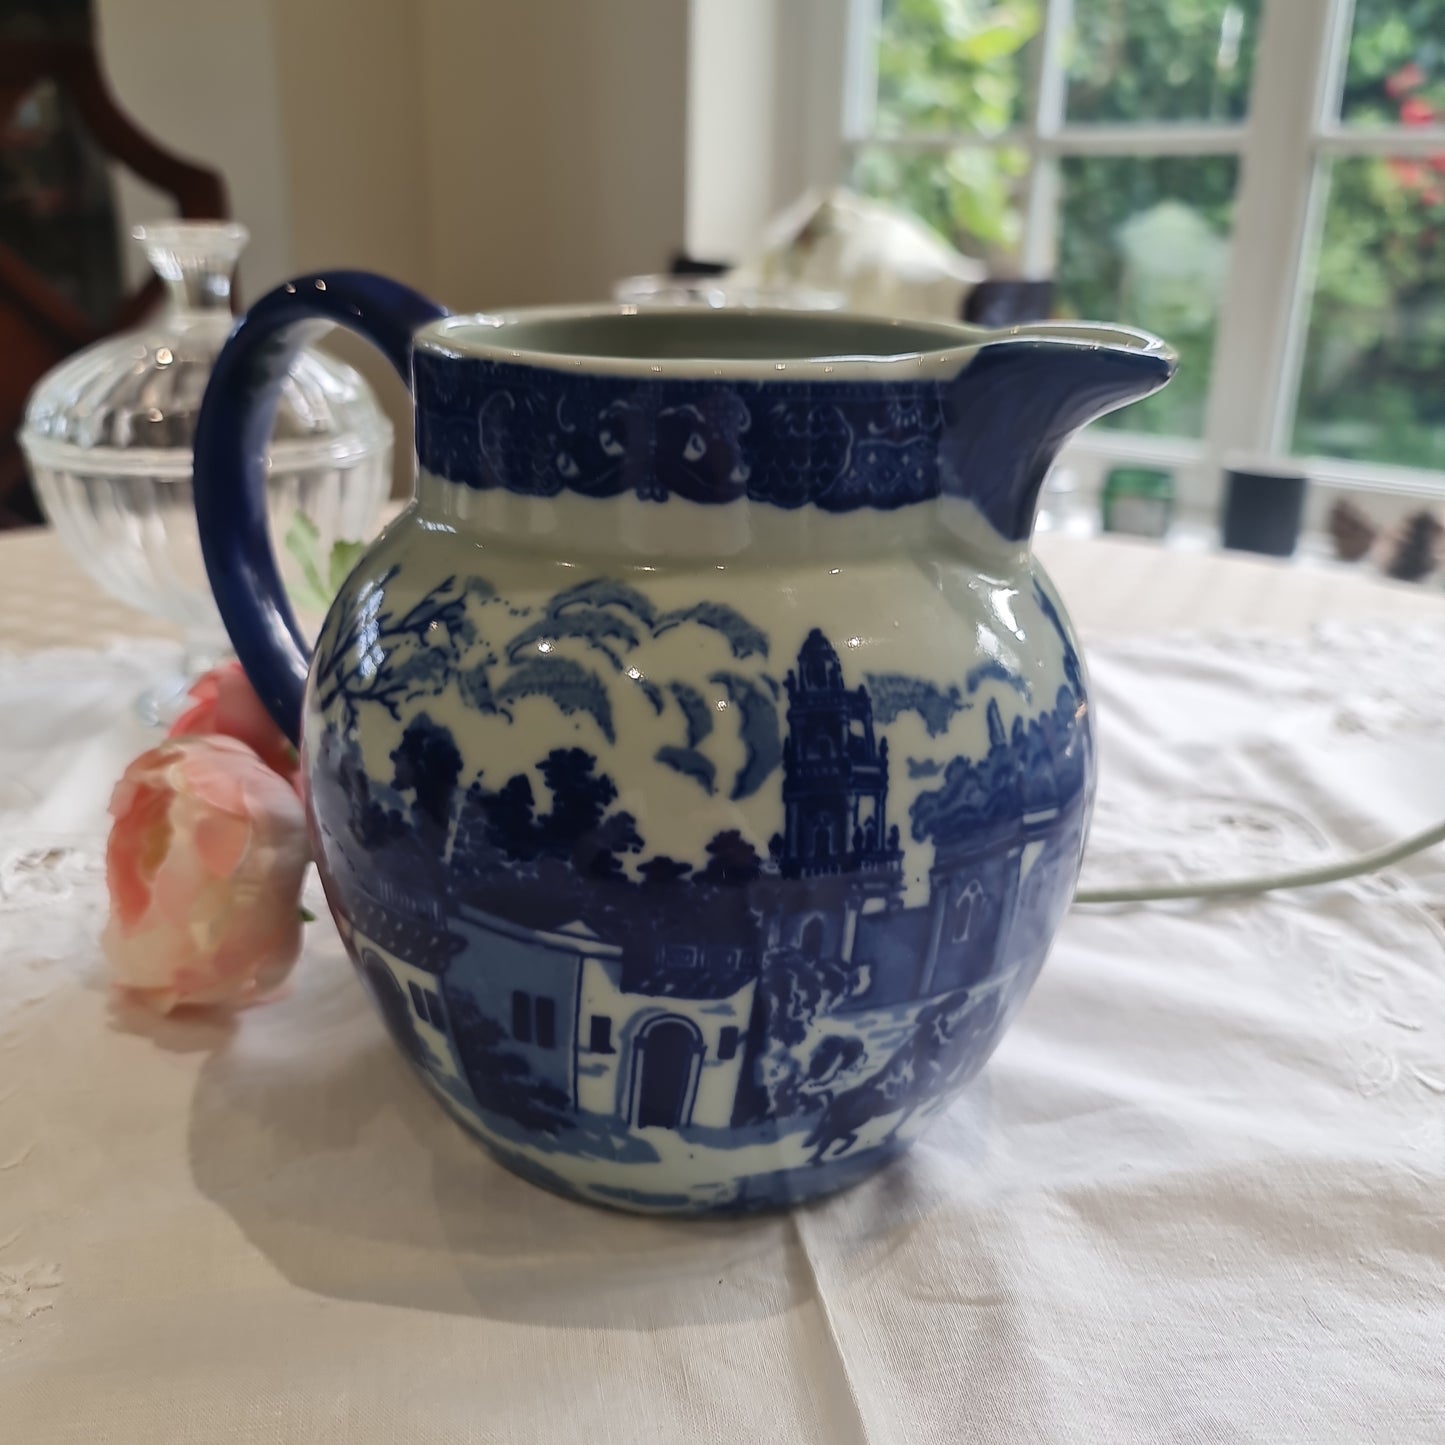 Vintage ironstone blue and white jug